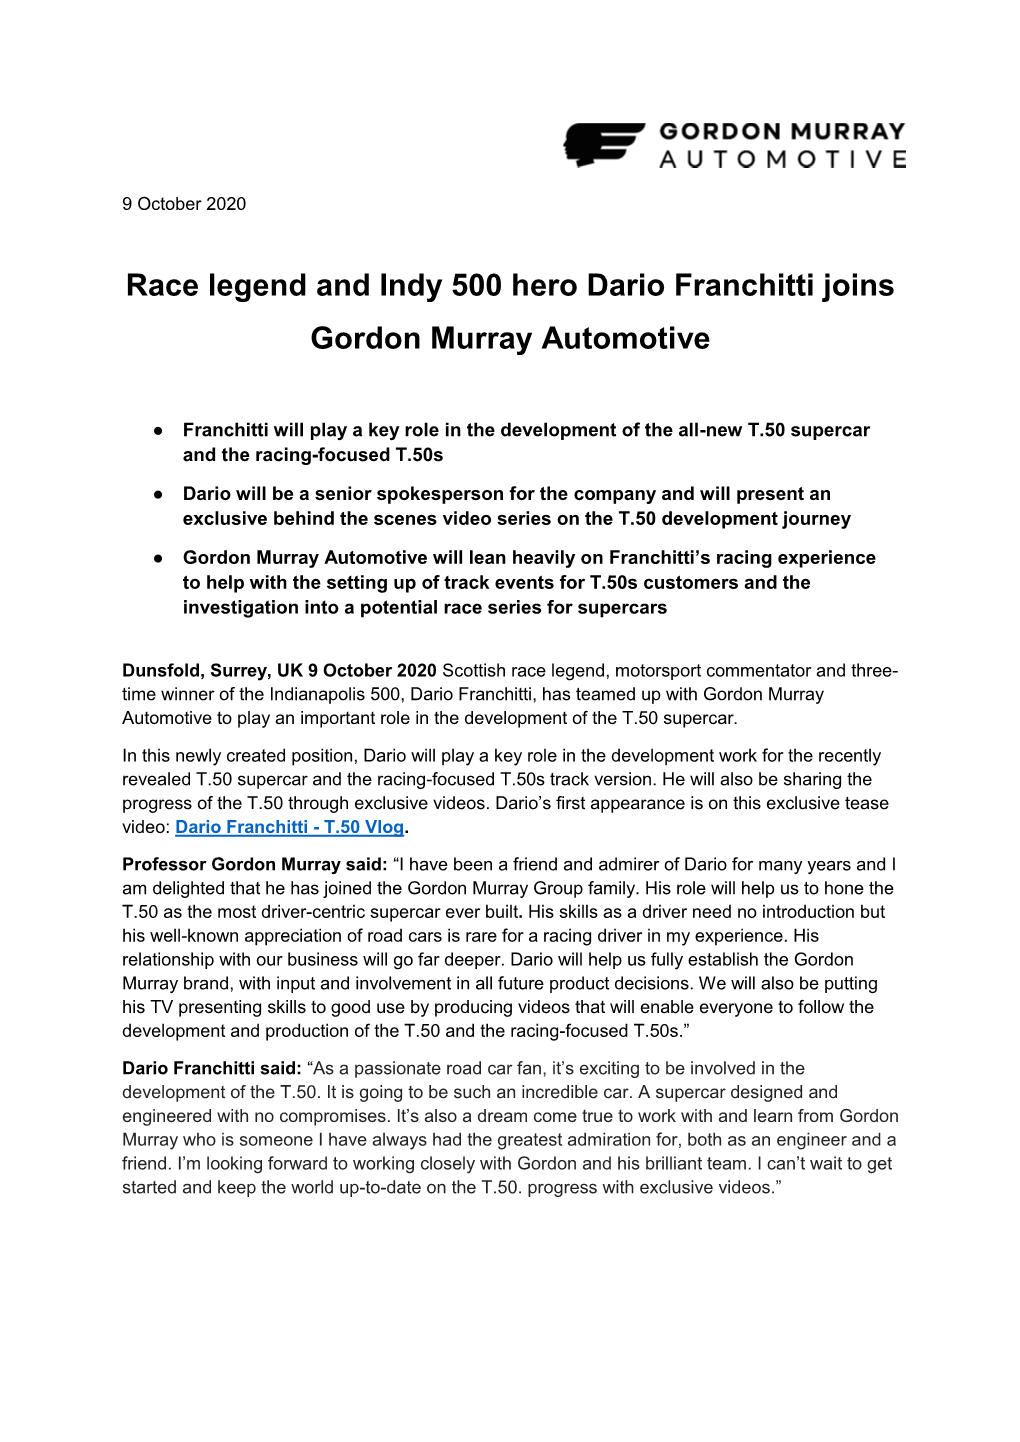 Race Legend and Indy 500 Hero Dario Franchitti Joins Gordon Murray Automotive